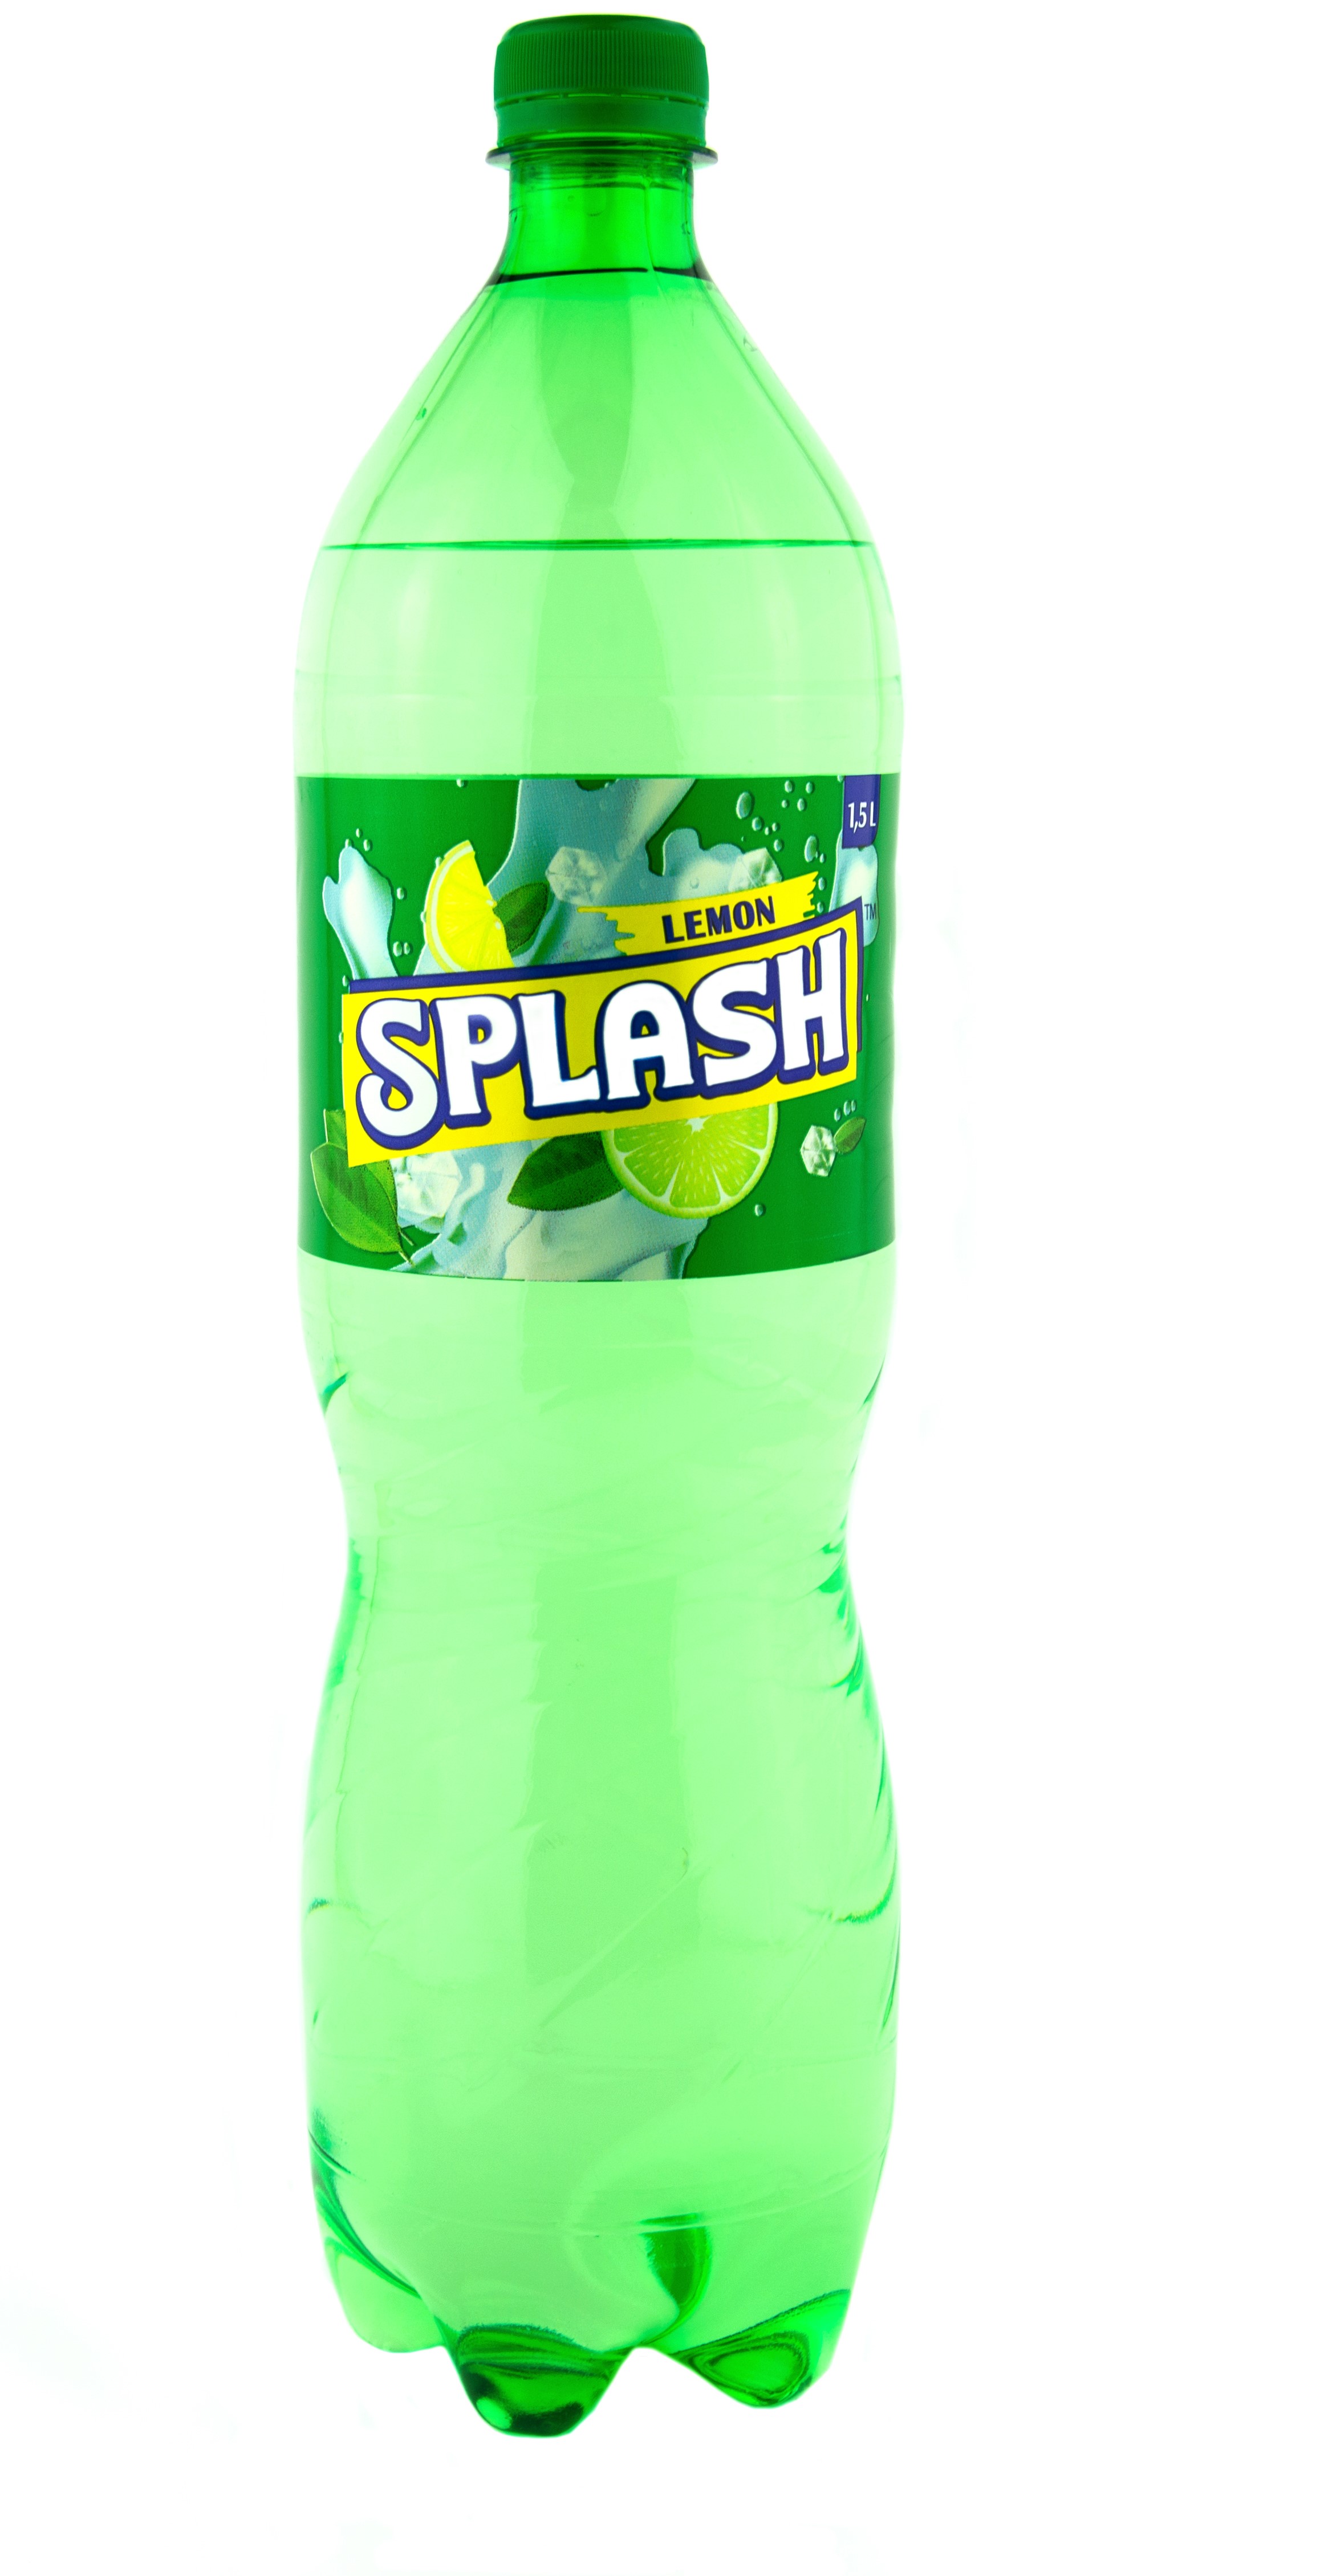 Splash 1,5.jpeg